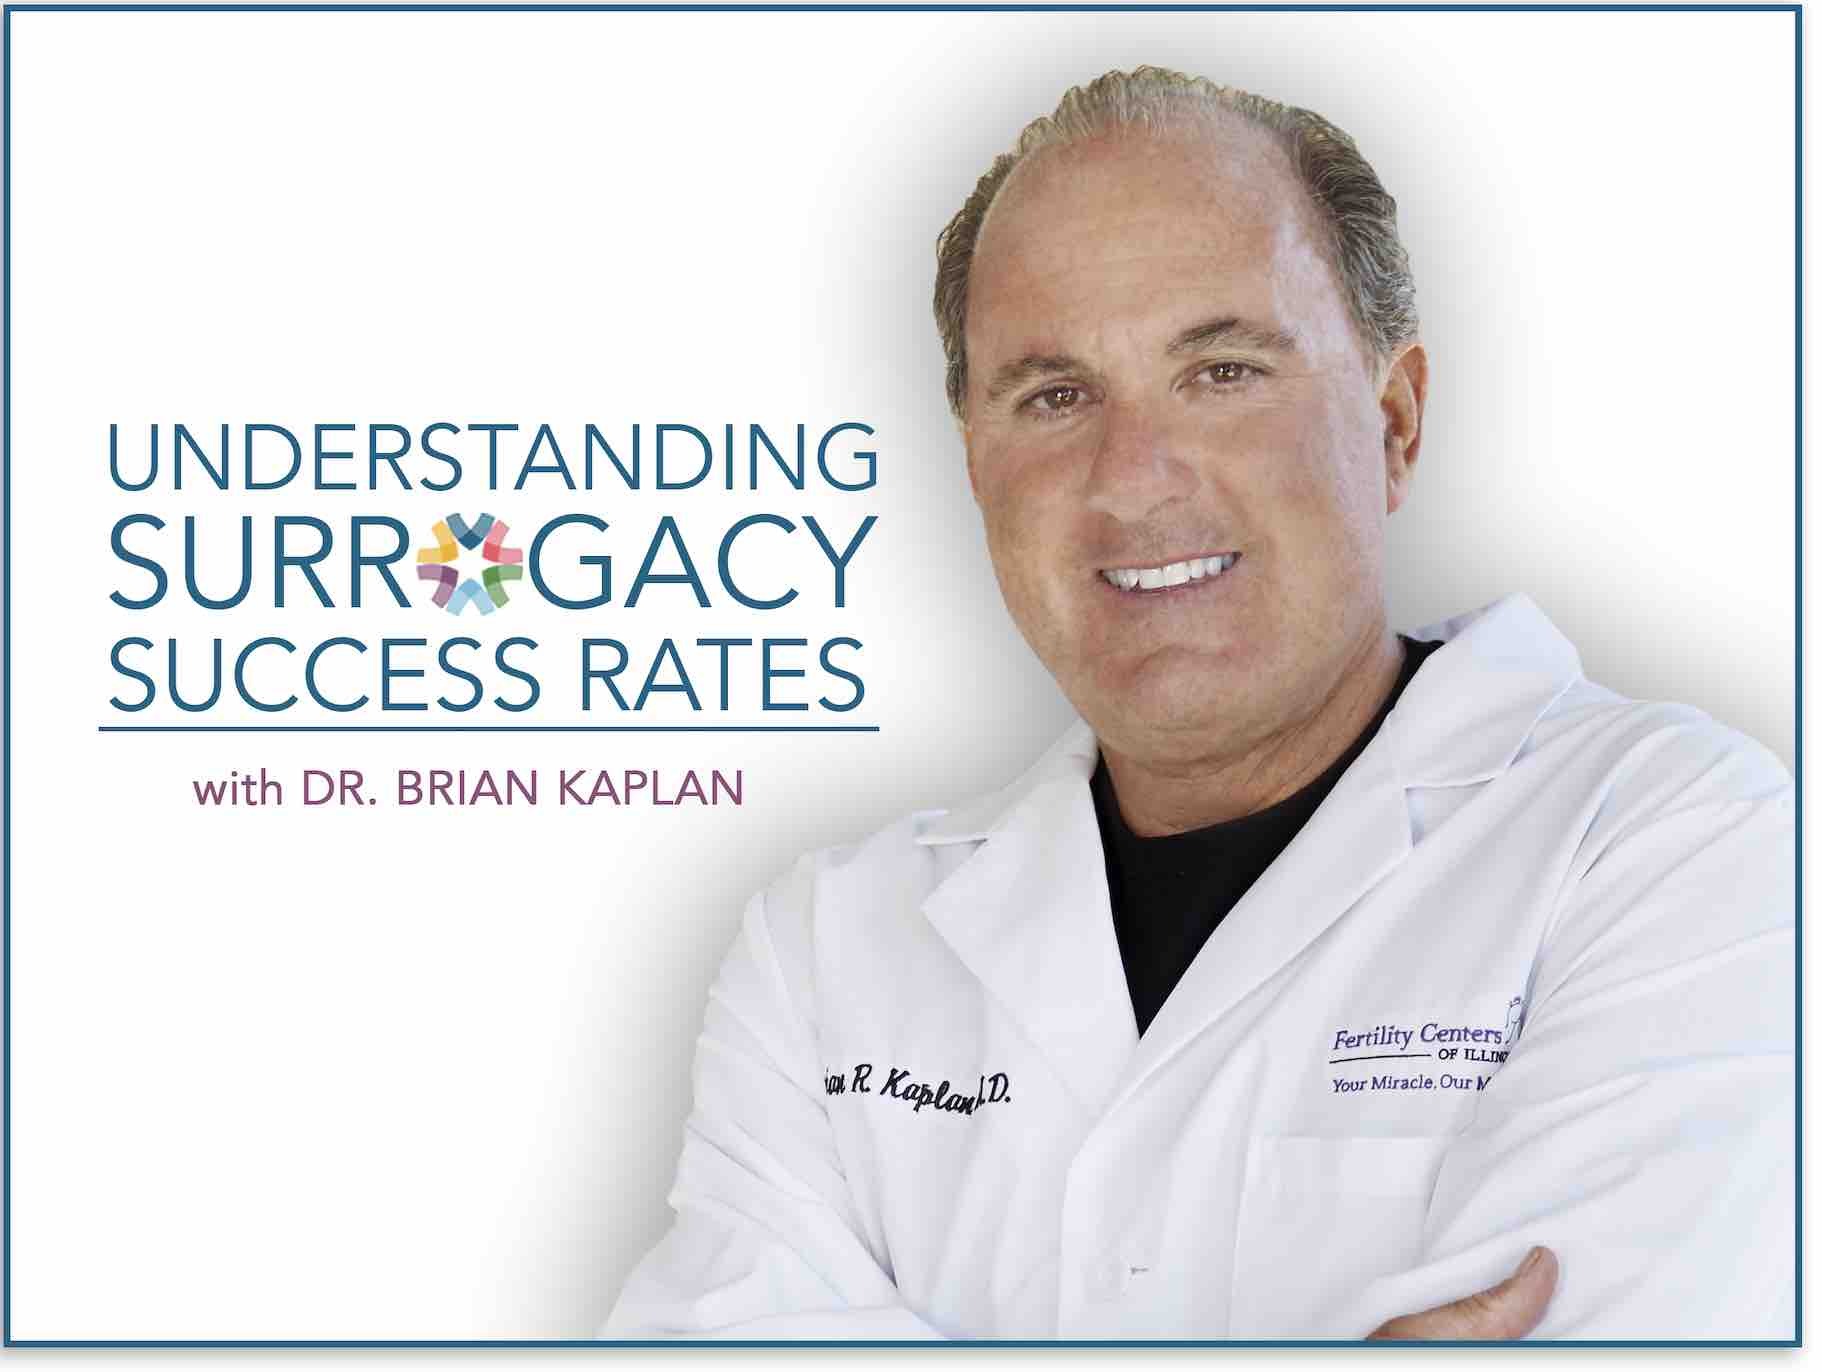 Surrogacy Success Rates with Dr. Brian Kaplan